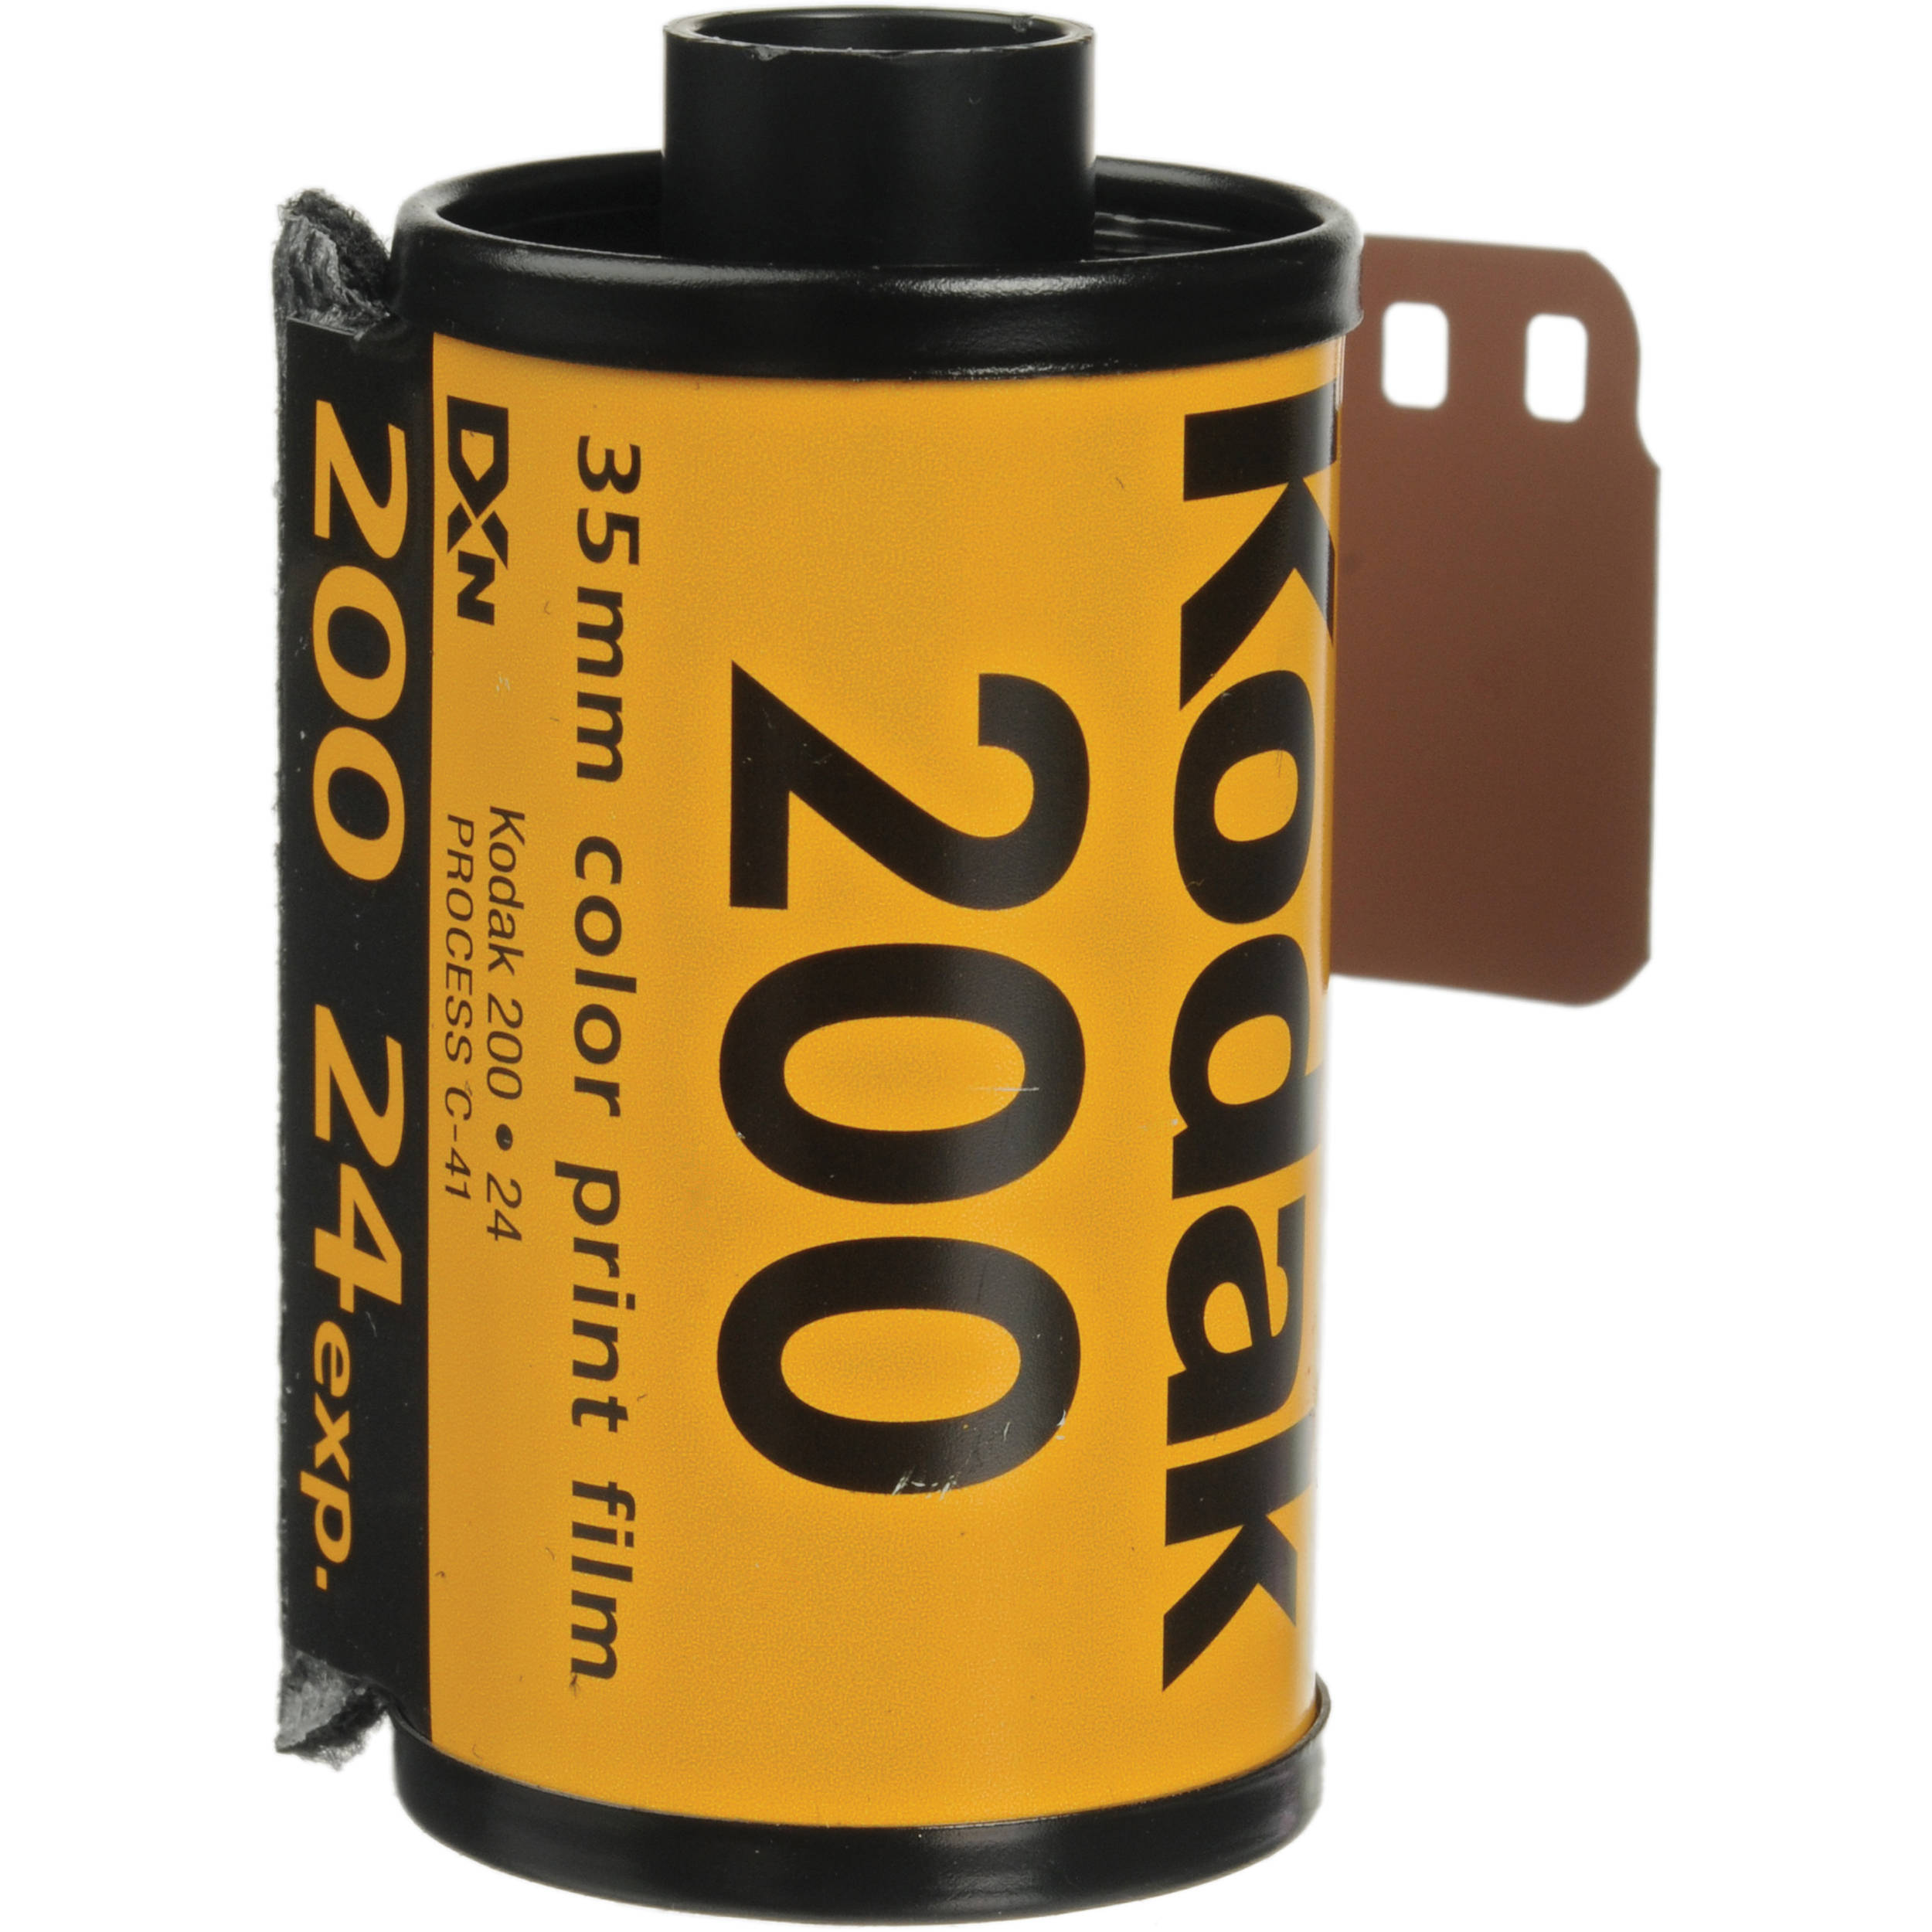 Kodak GOLD 200 Color Negative Film 6033955 B&H Photo Video